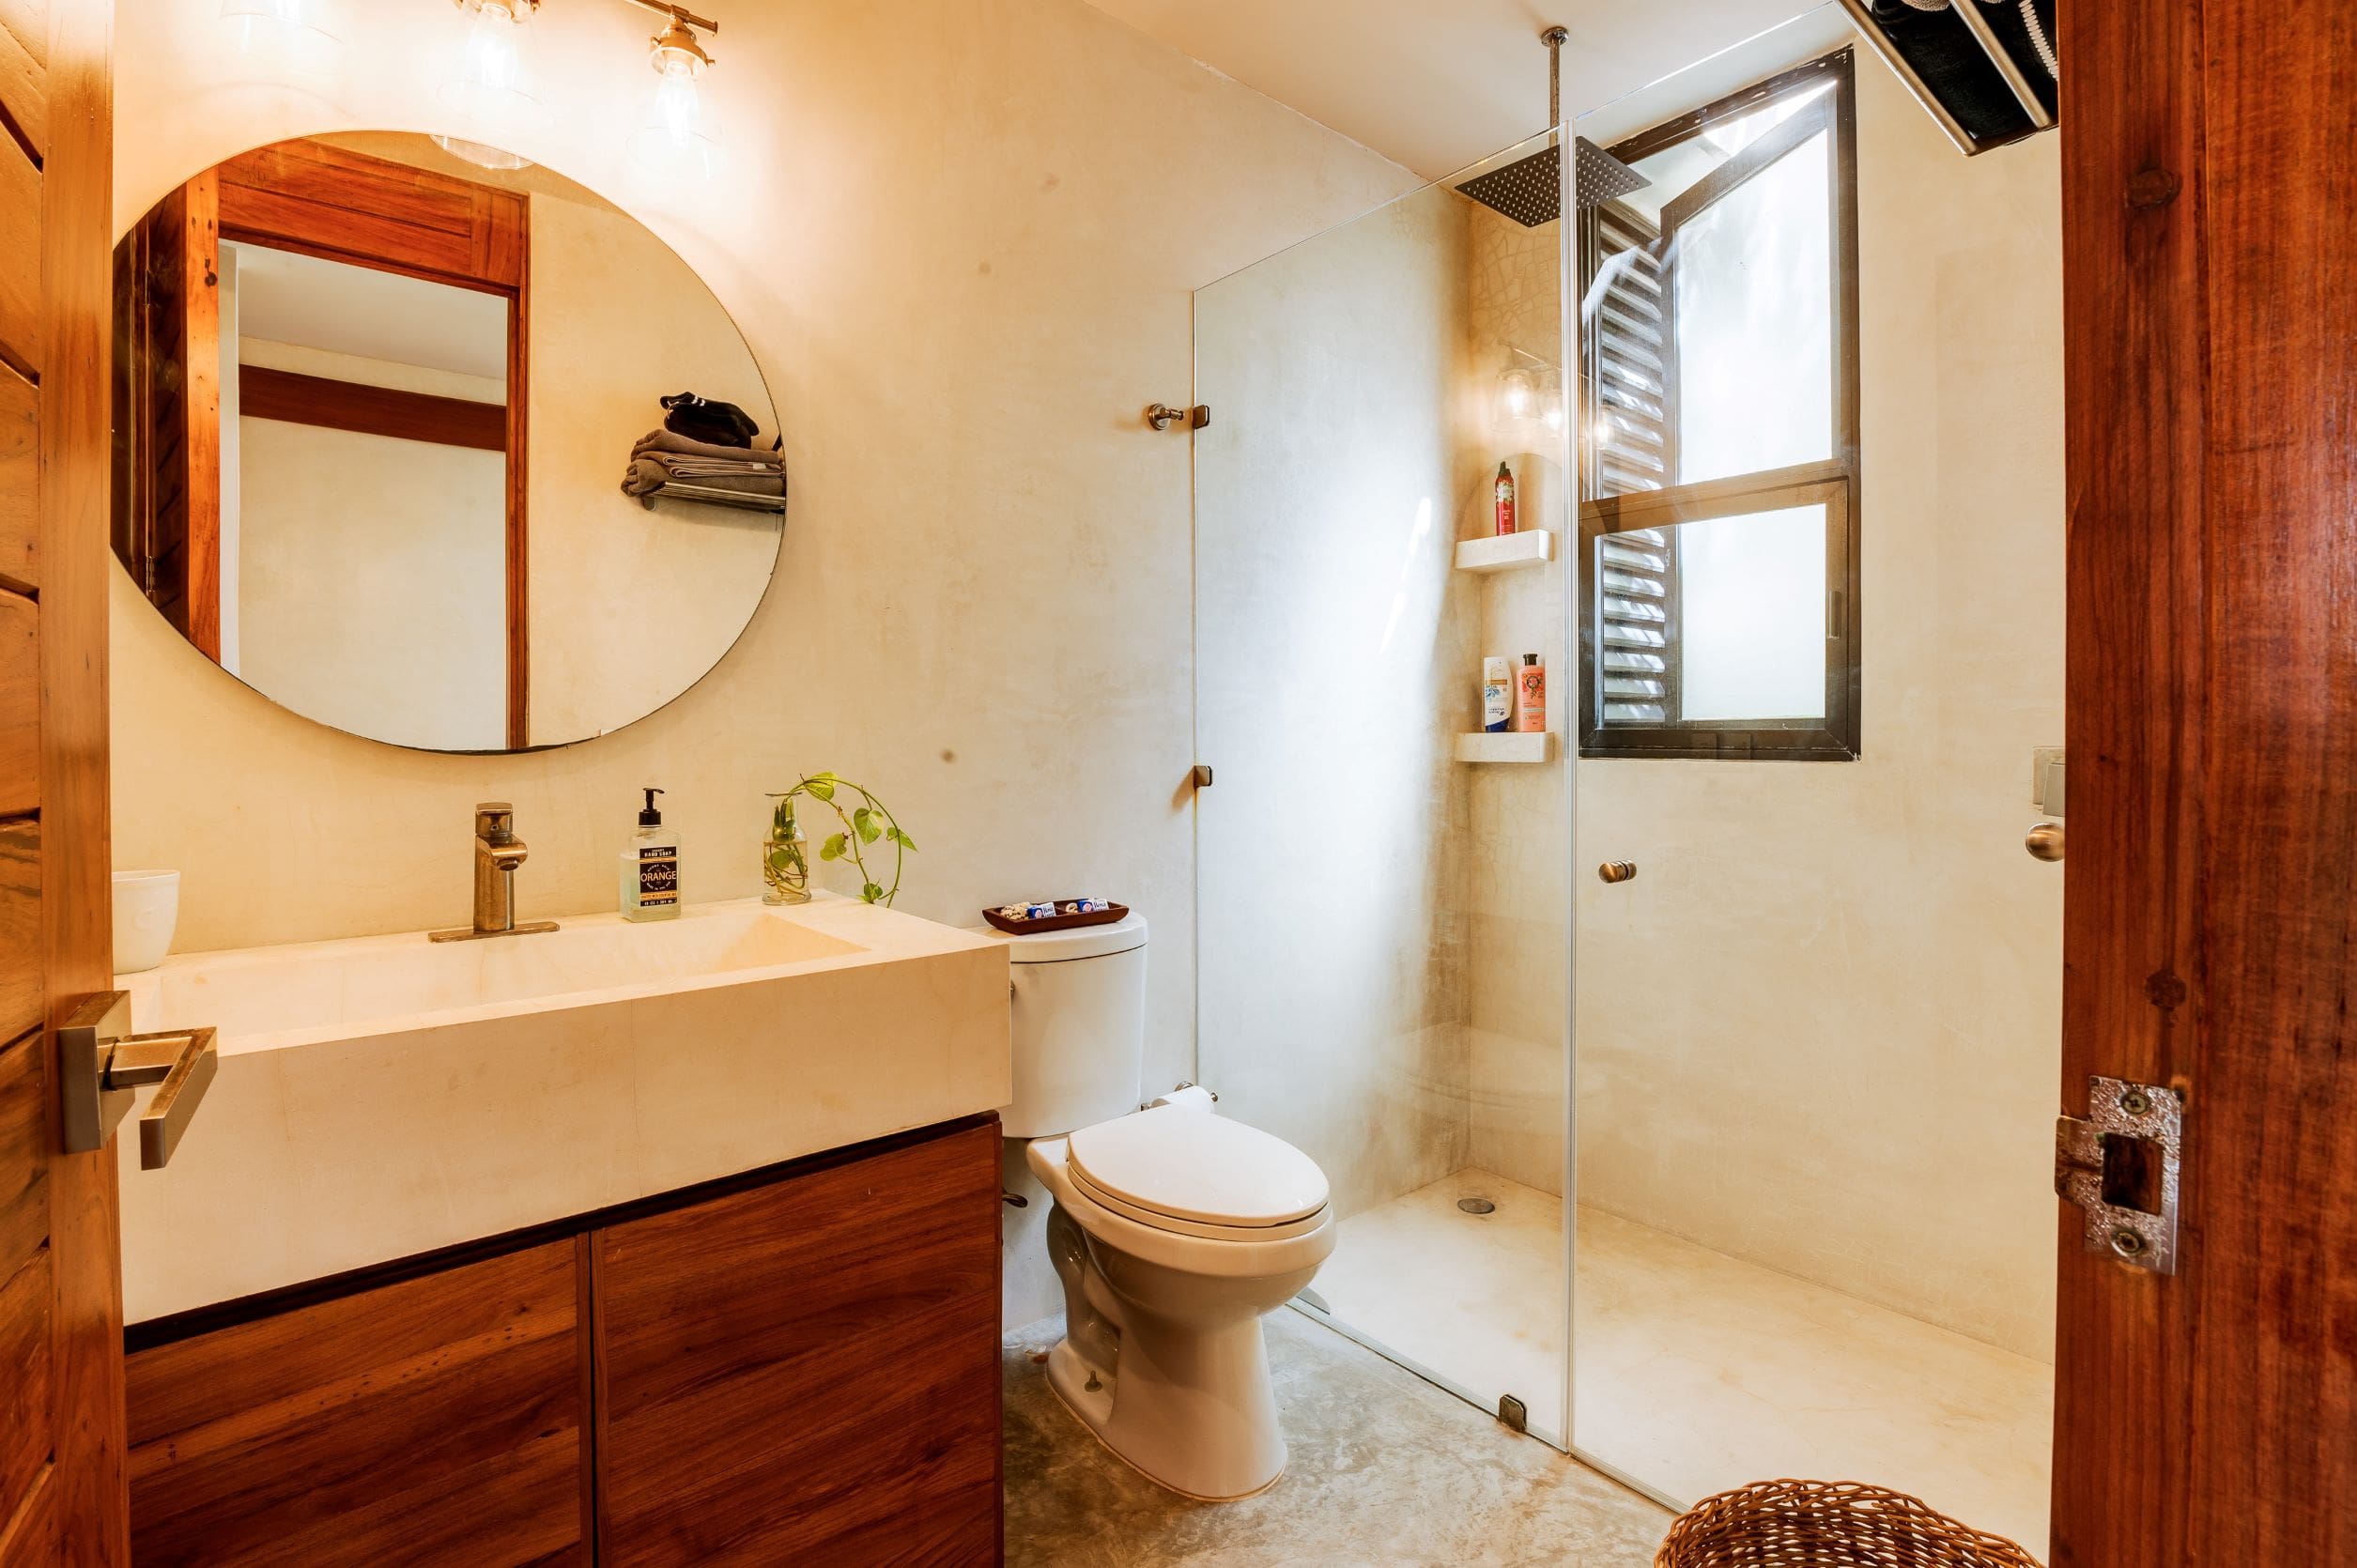 u tulum real estate quinoa building bathroom and shower min